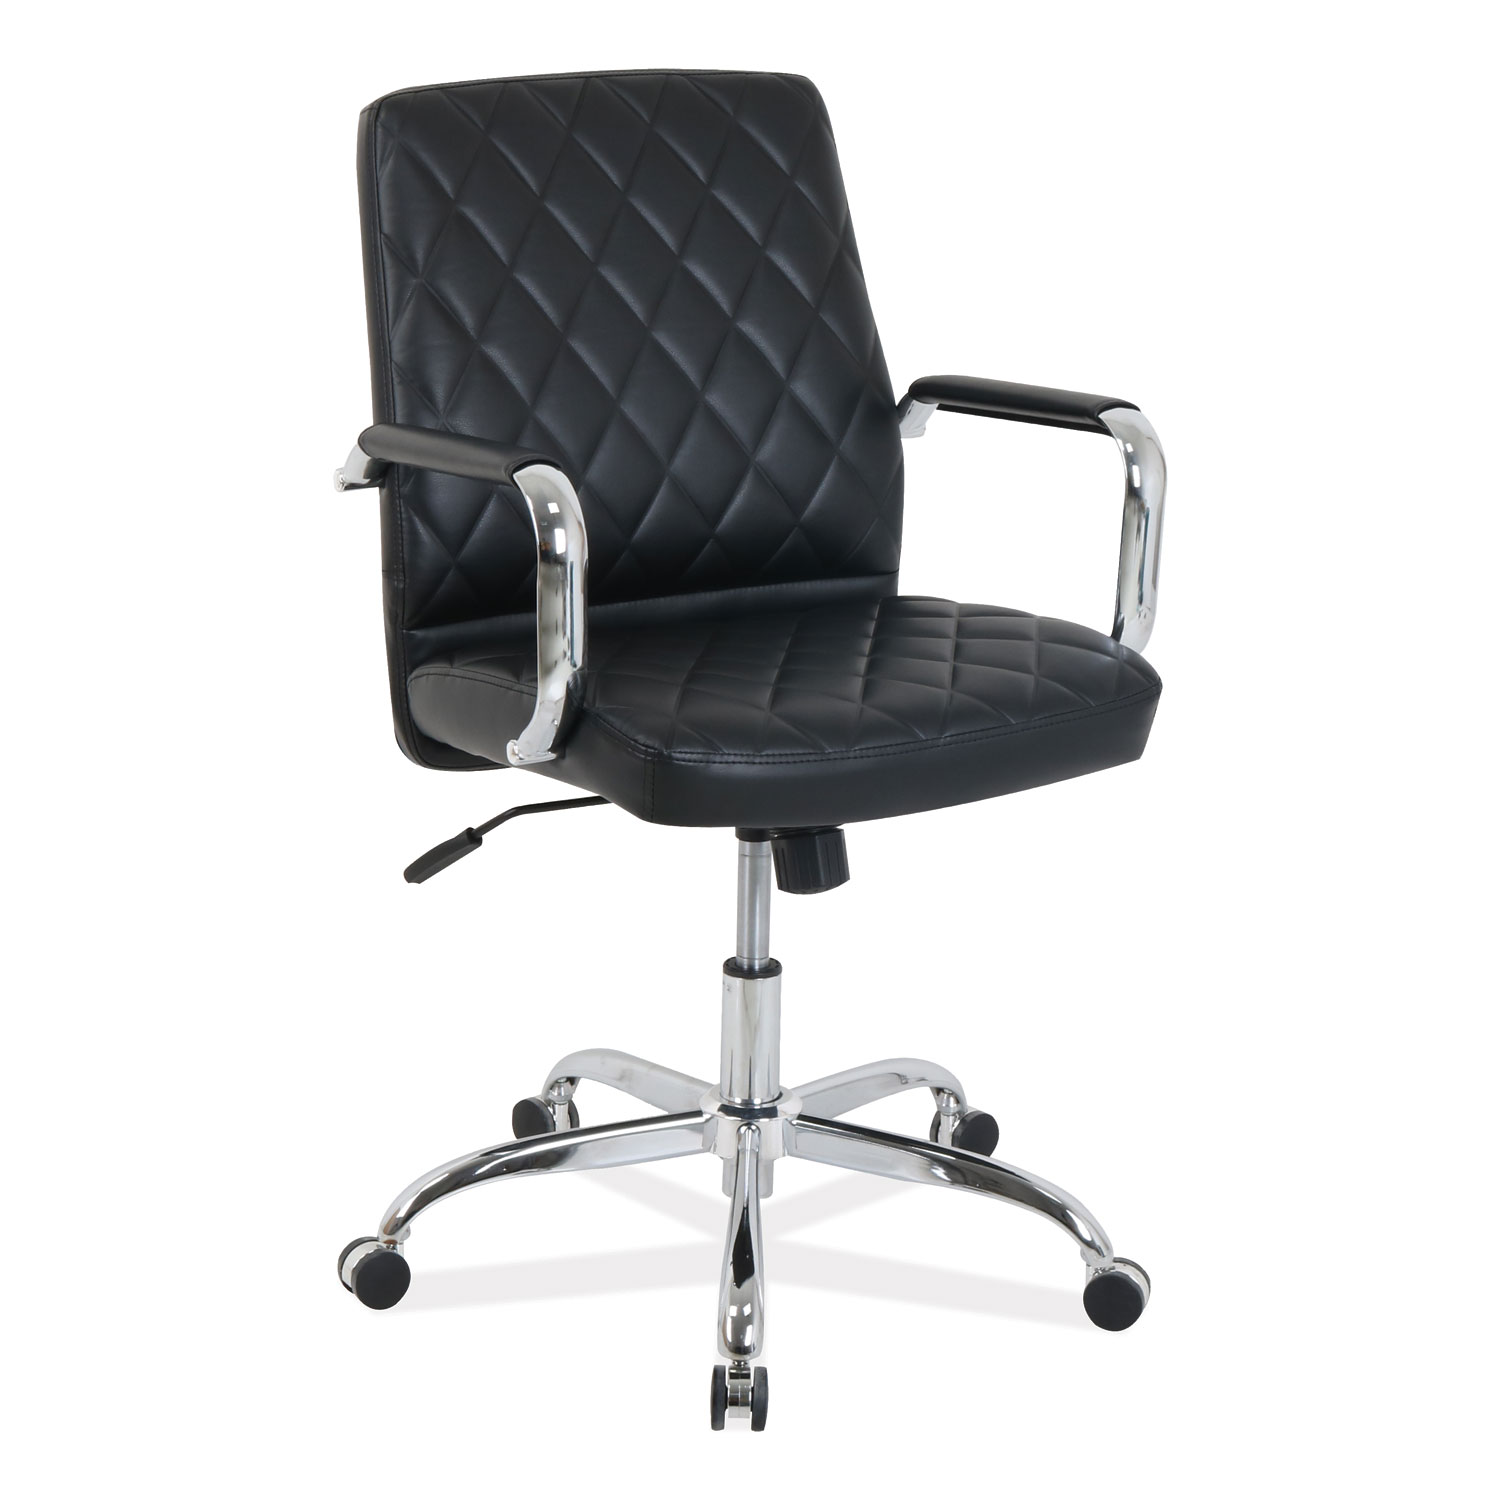  kathy ireland OFFICE by Alera KA54219 kathy ireland OFFICE by Alera Nebulous Mid-Back Diamond-Embossed Leather Chair, Up to 275 lbs., Black Seat, Chrome Base (ALEKA54219) 